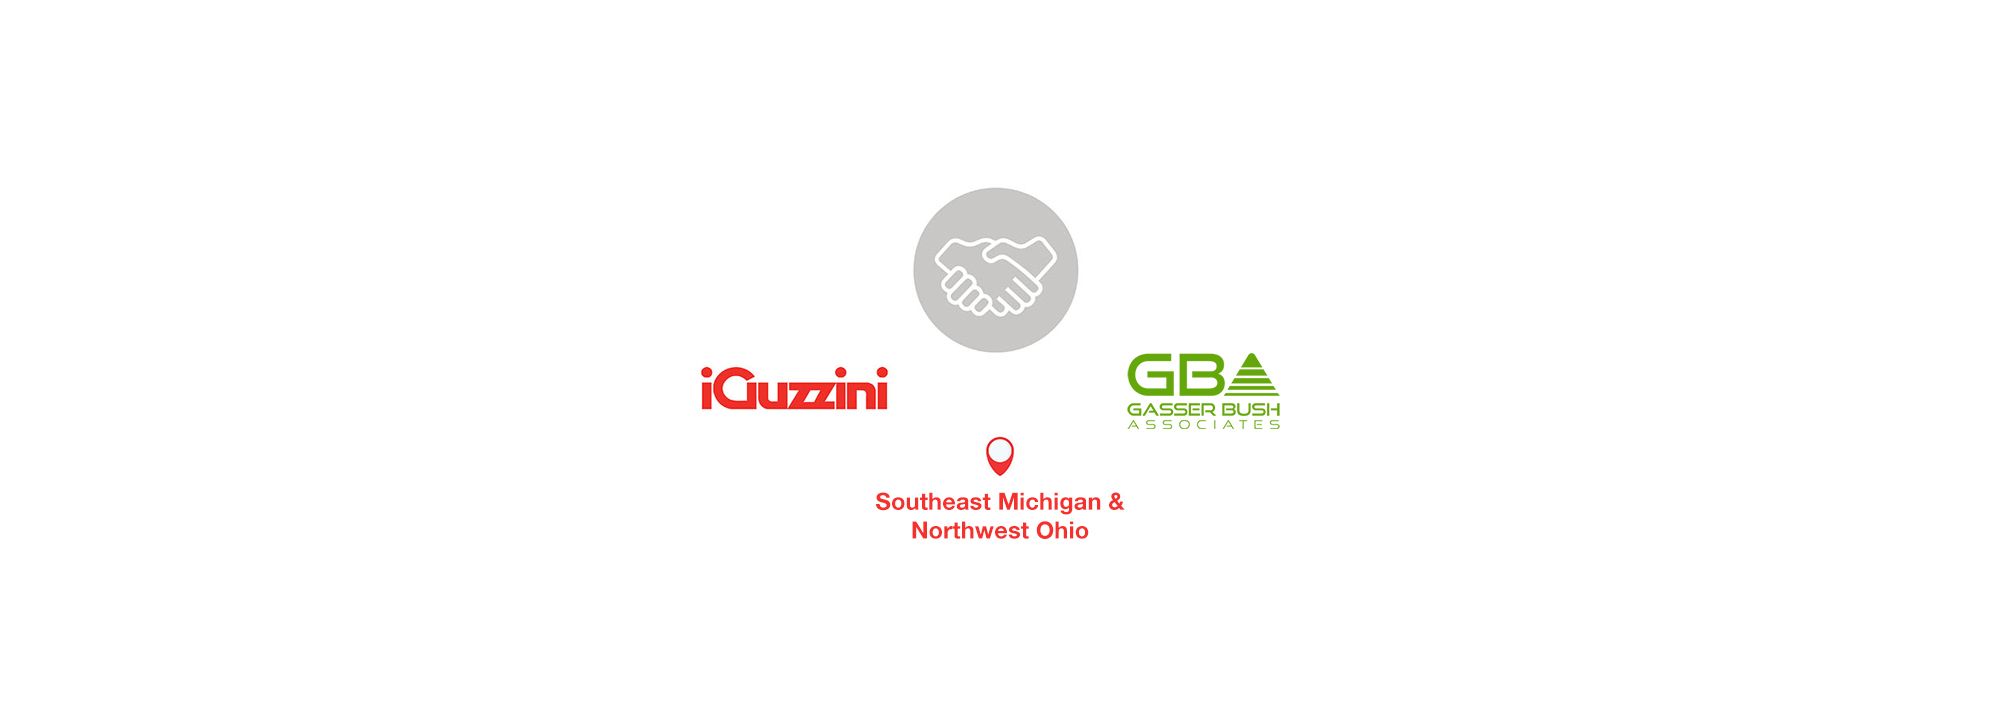 Gasser Bush Associates new representative for Southeast Michigan & Northwest Ohio